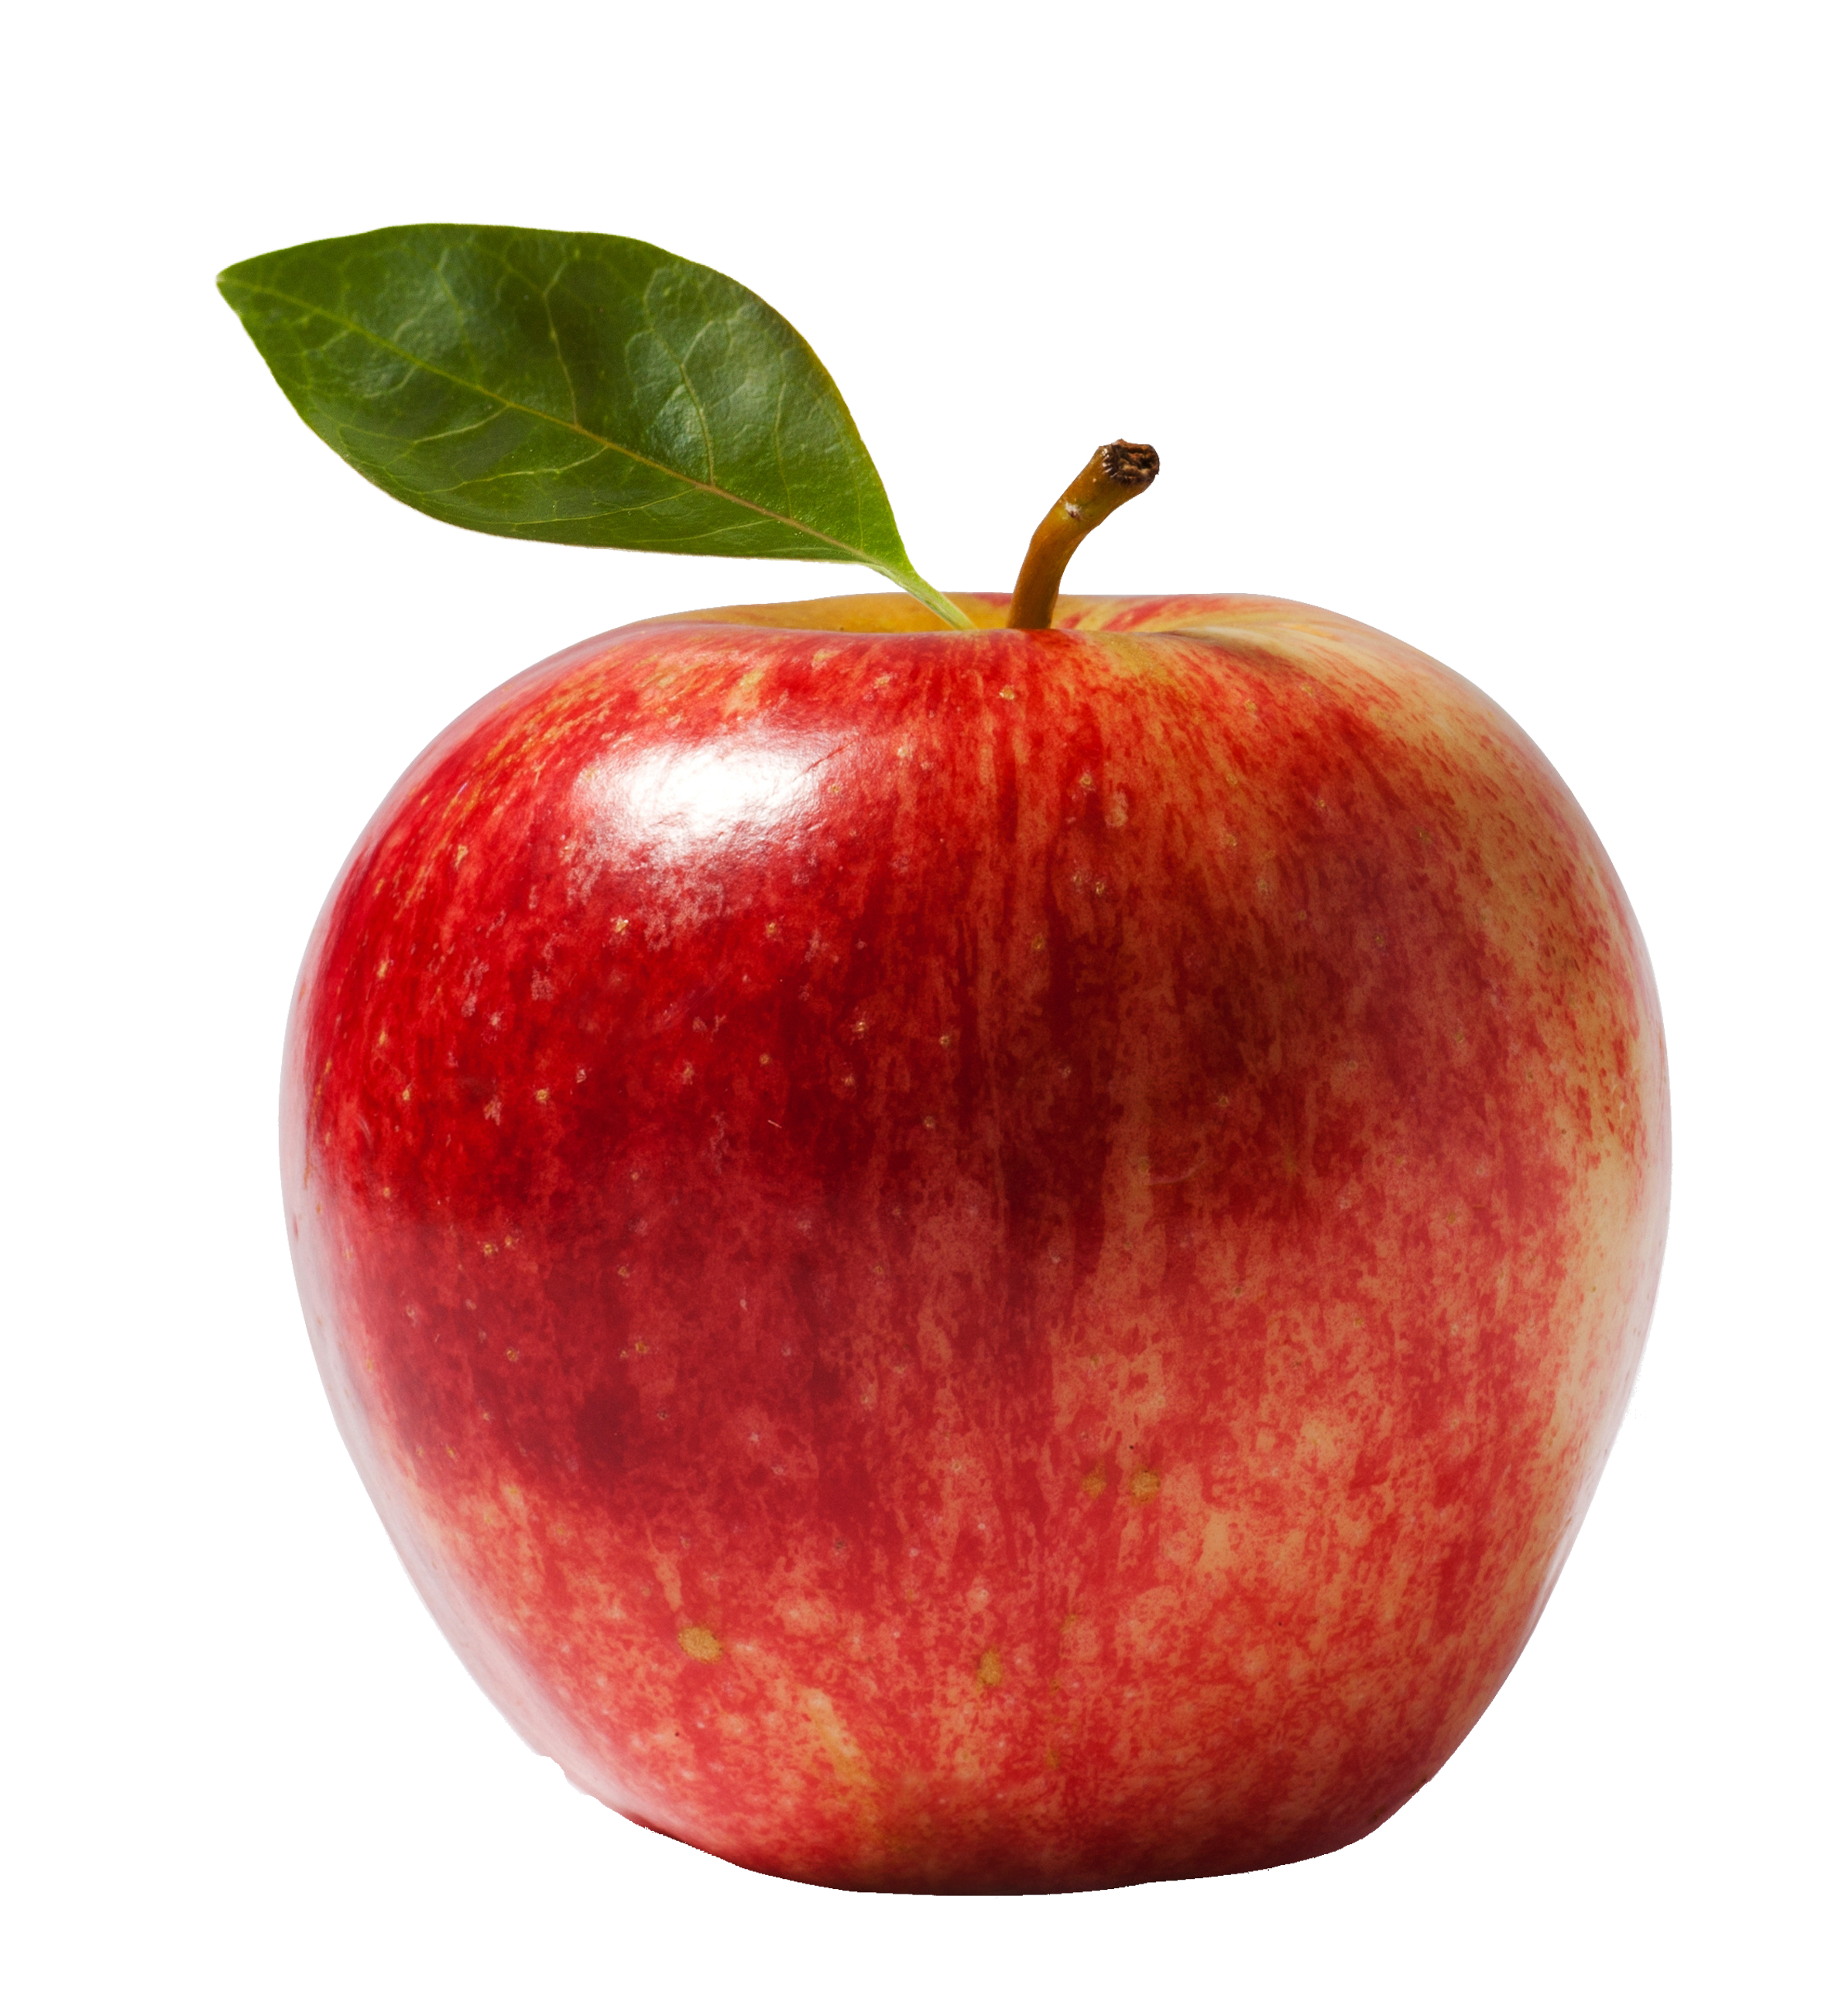 Red Apple Fruit PNG Images - Apple Fruit Png